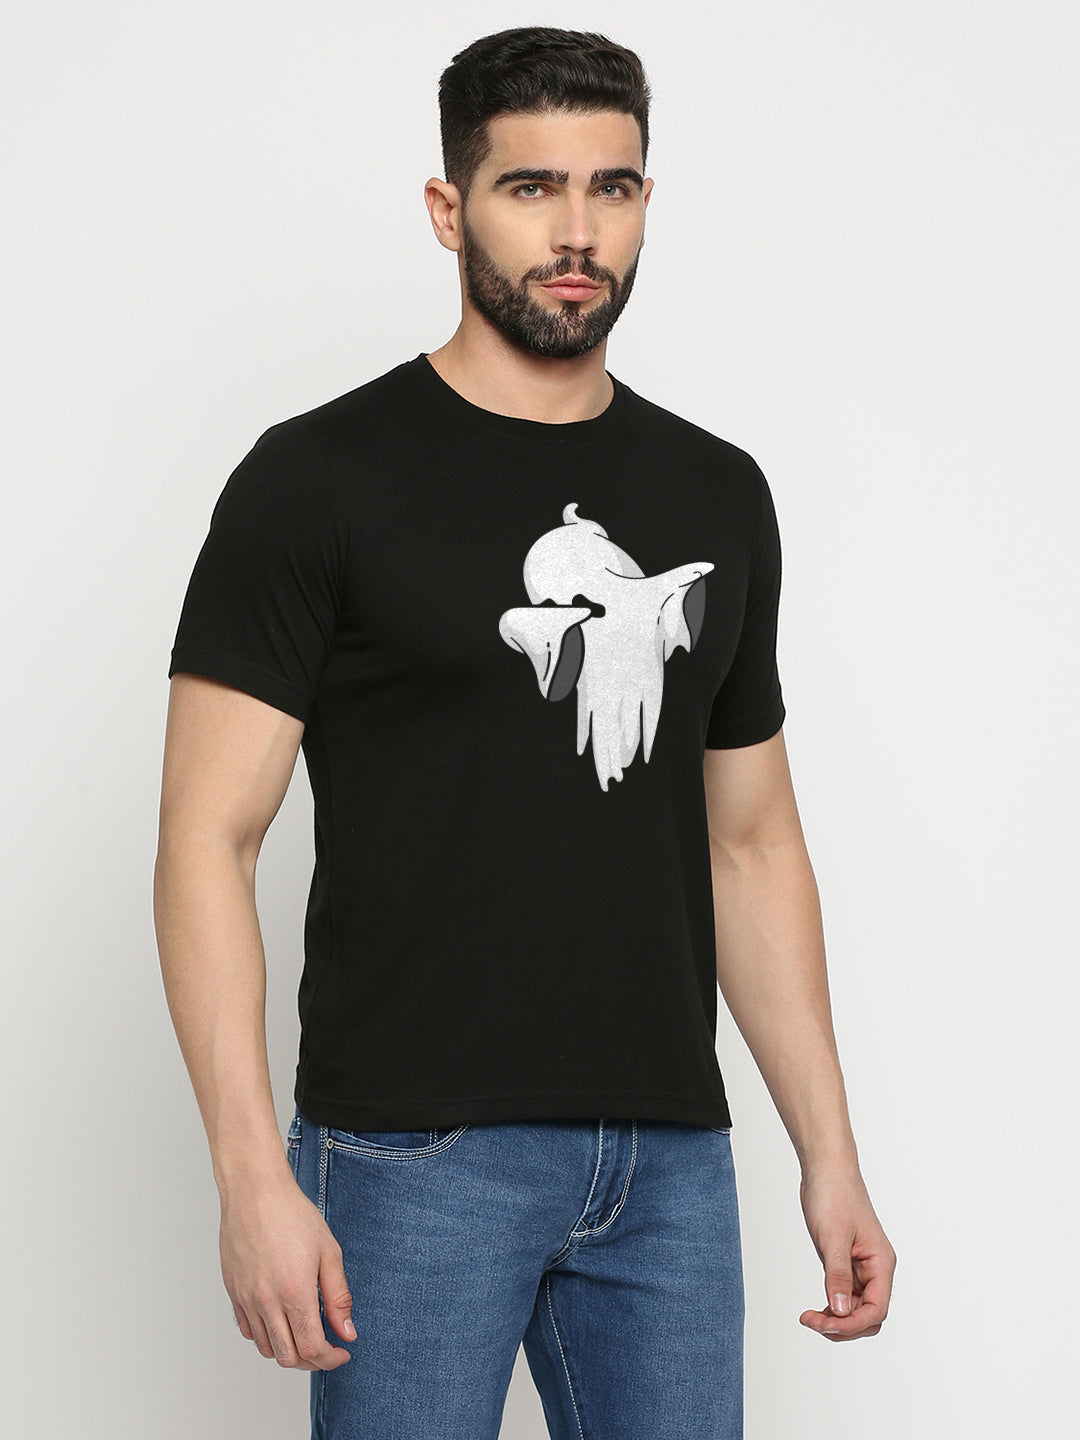 Dabbing Ghost T-Shirt